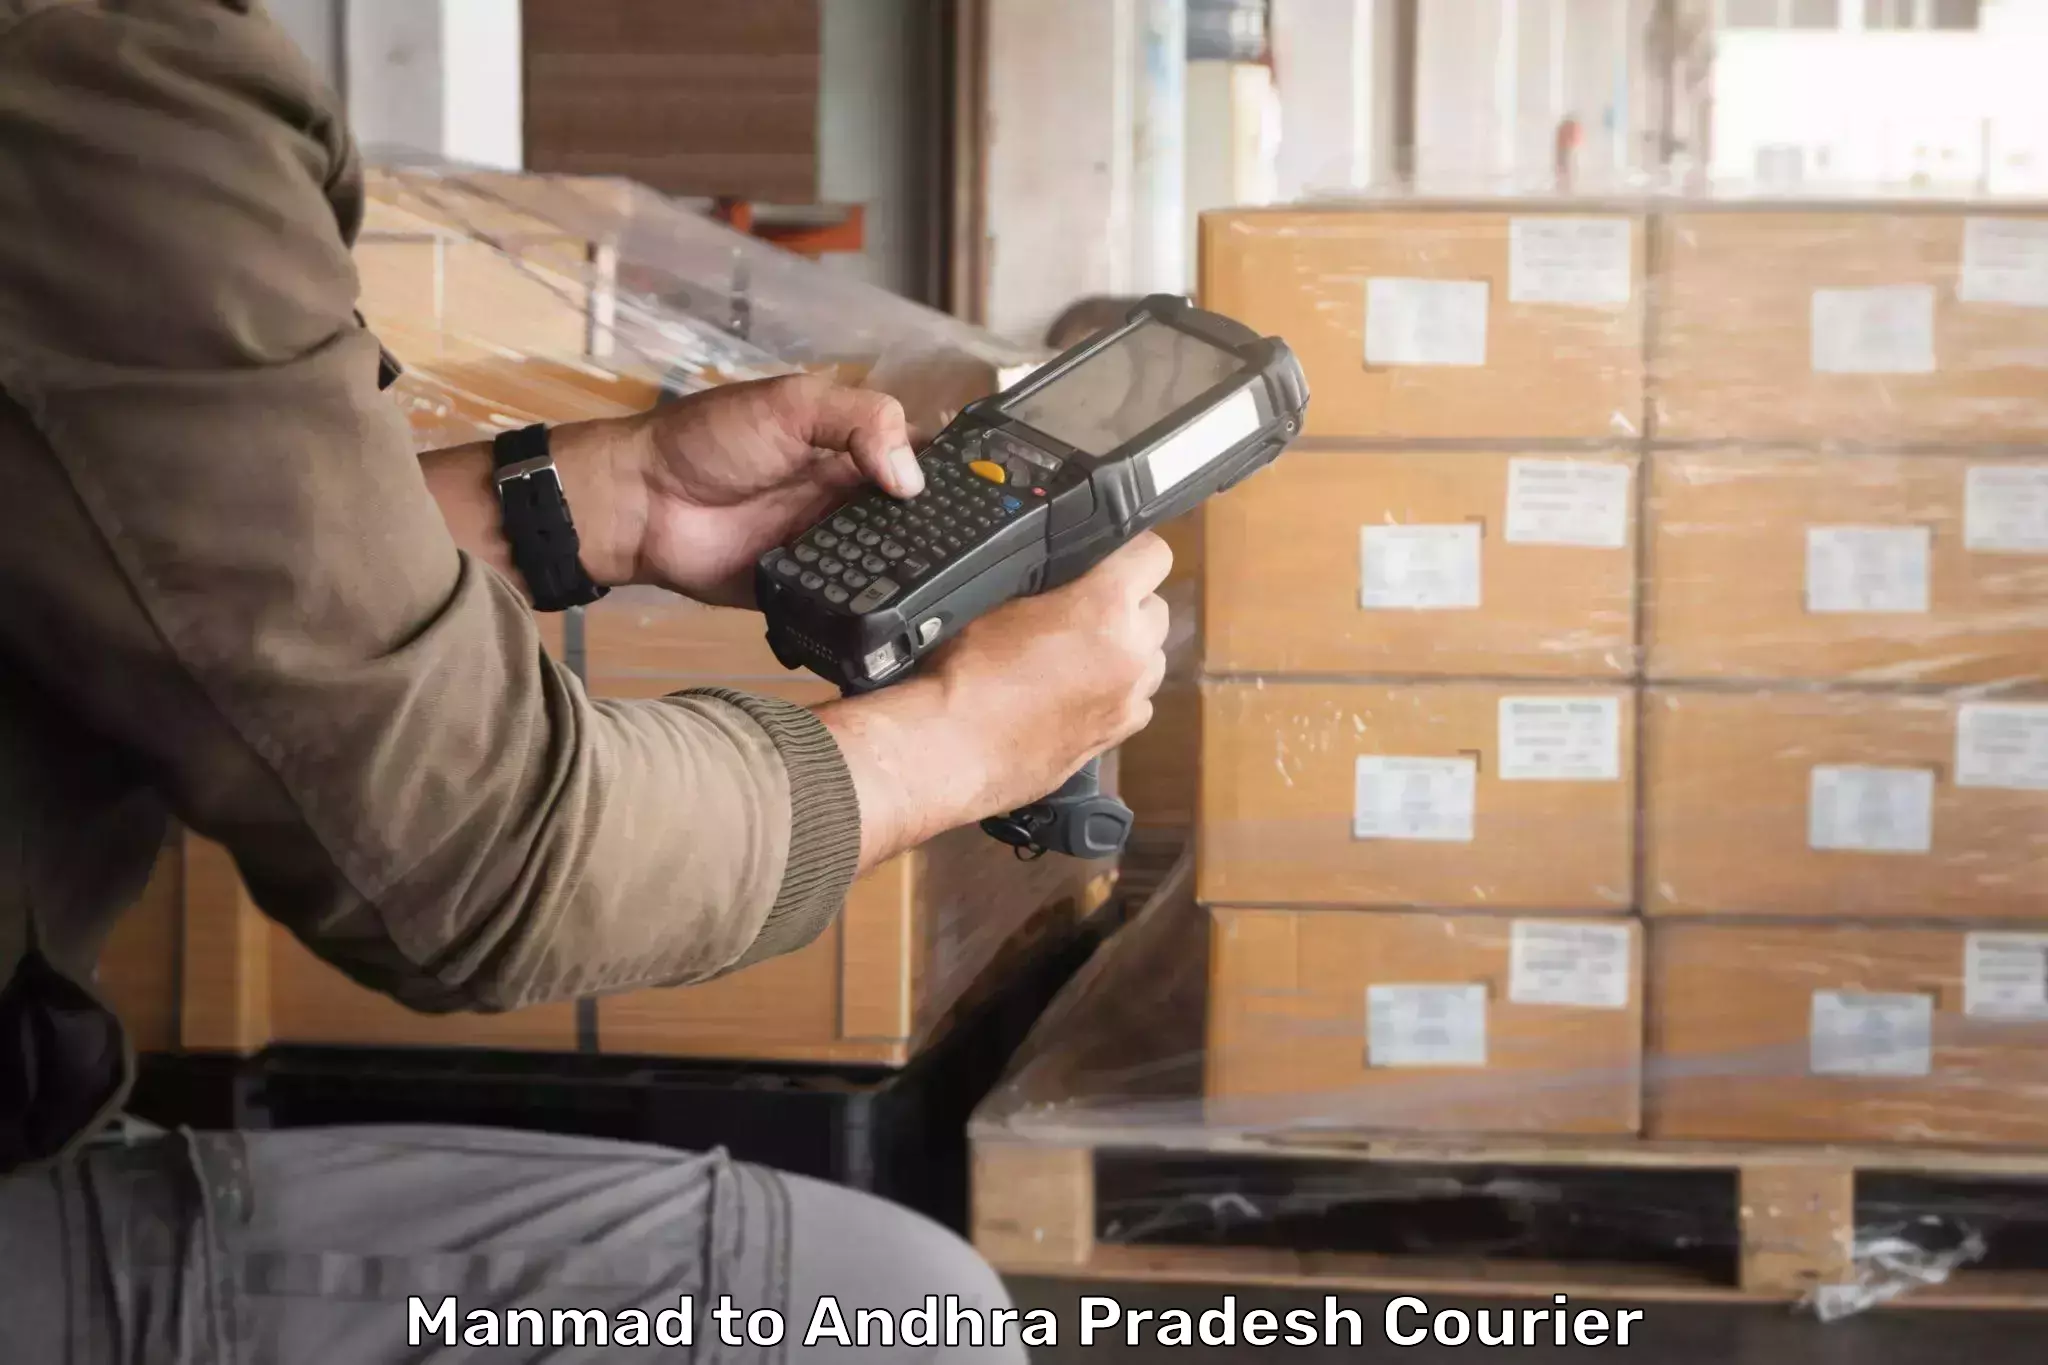 Smart shipping technology Manmad to Visakhapatnam Port